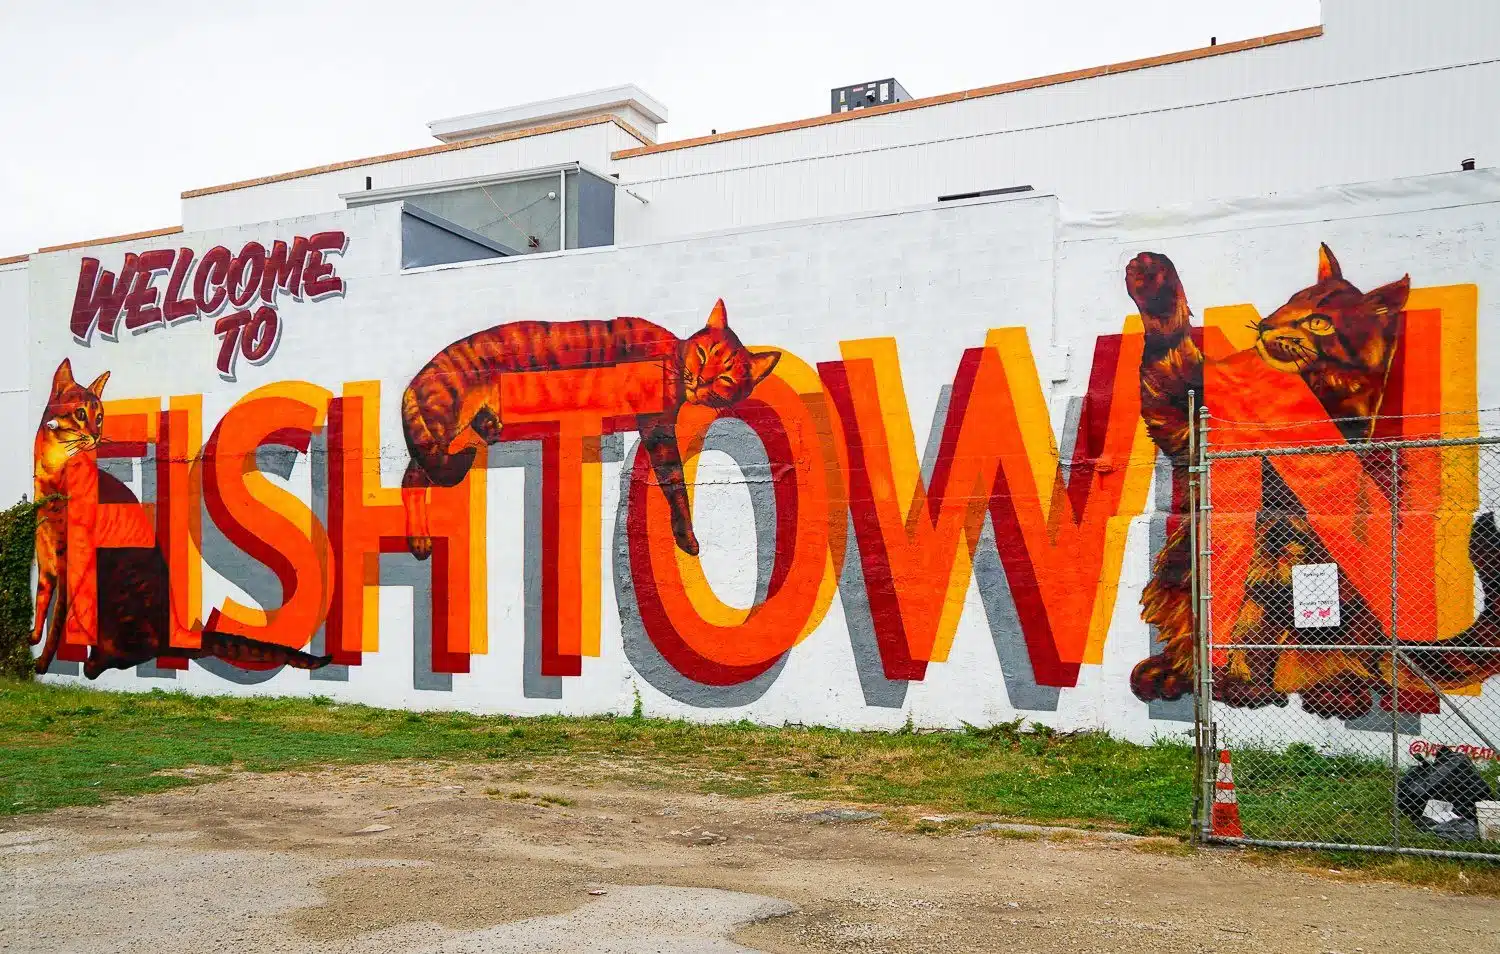 This mural welcomes you to Fishtown, Philadelphia.